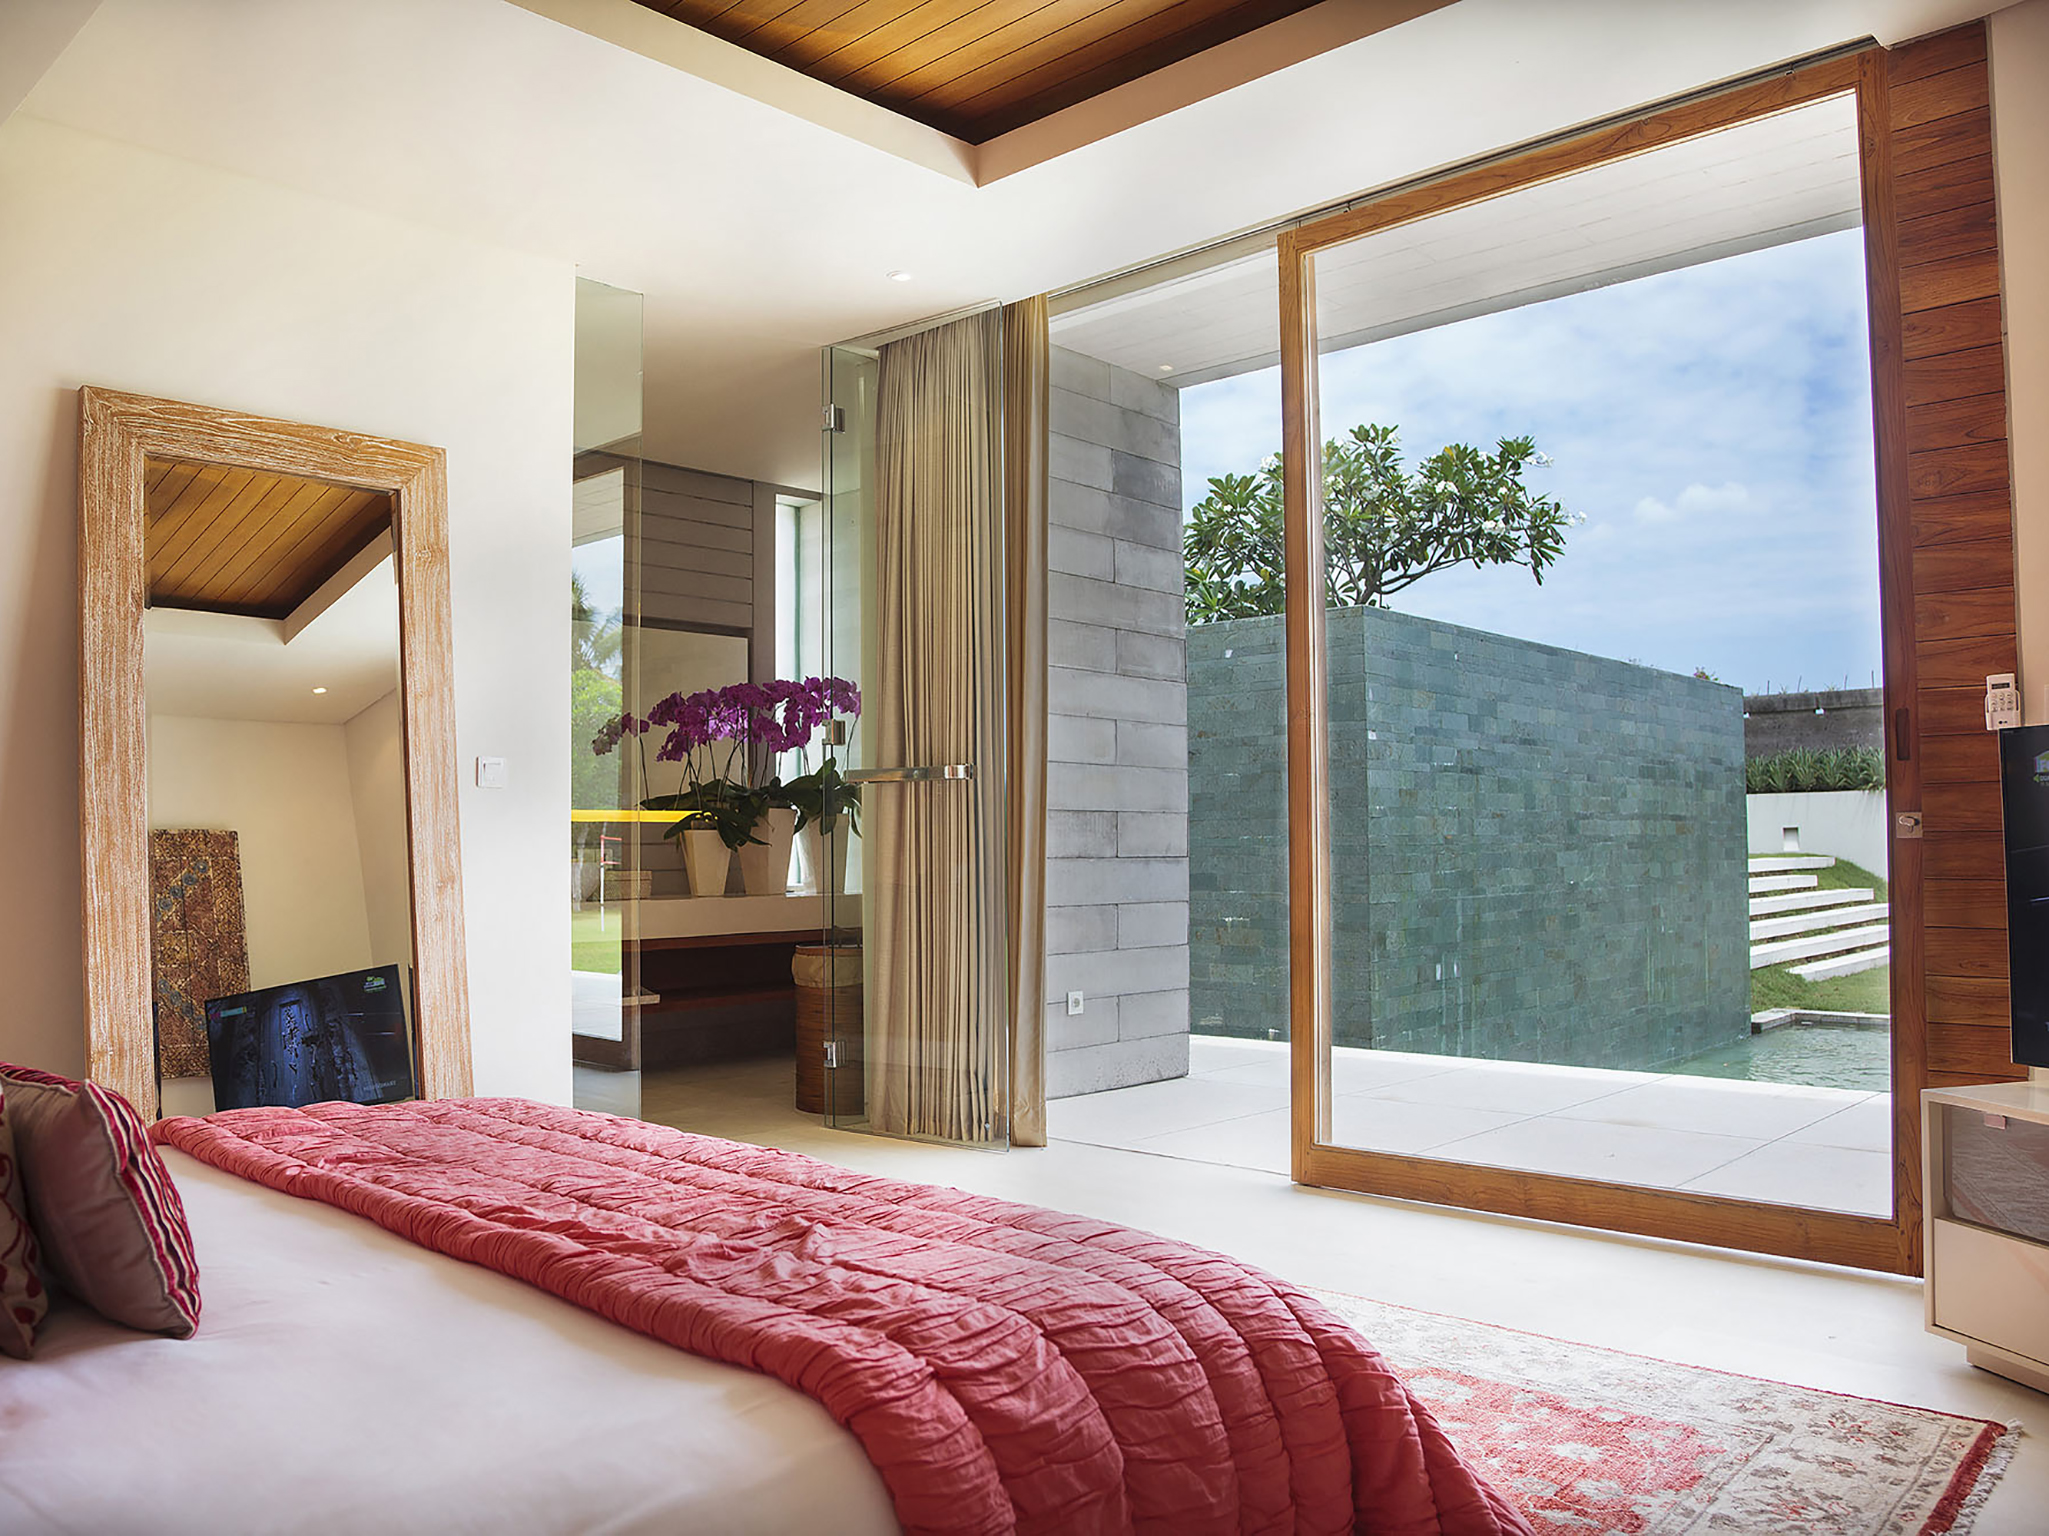 The Iman Villa - View from the bedroom - The Iman Villa, Canggu, Bali